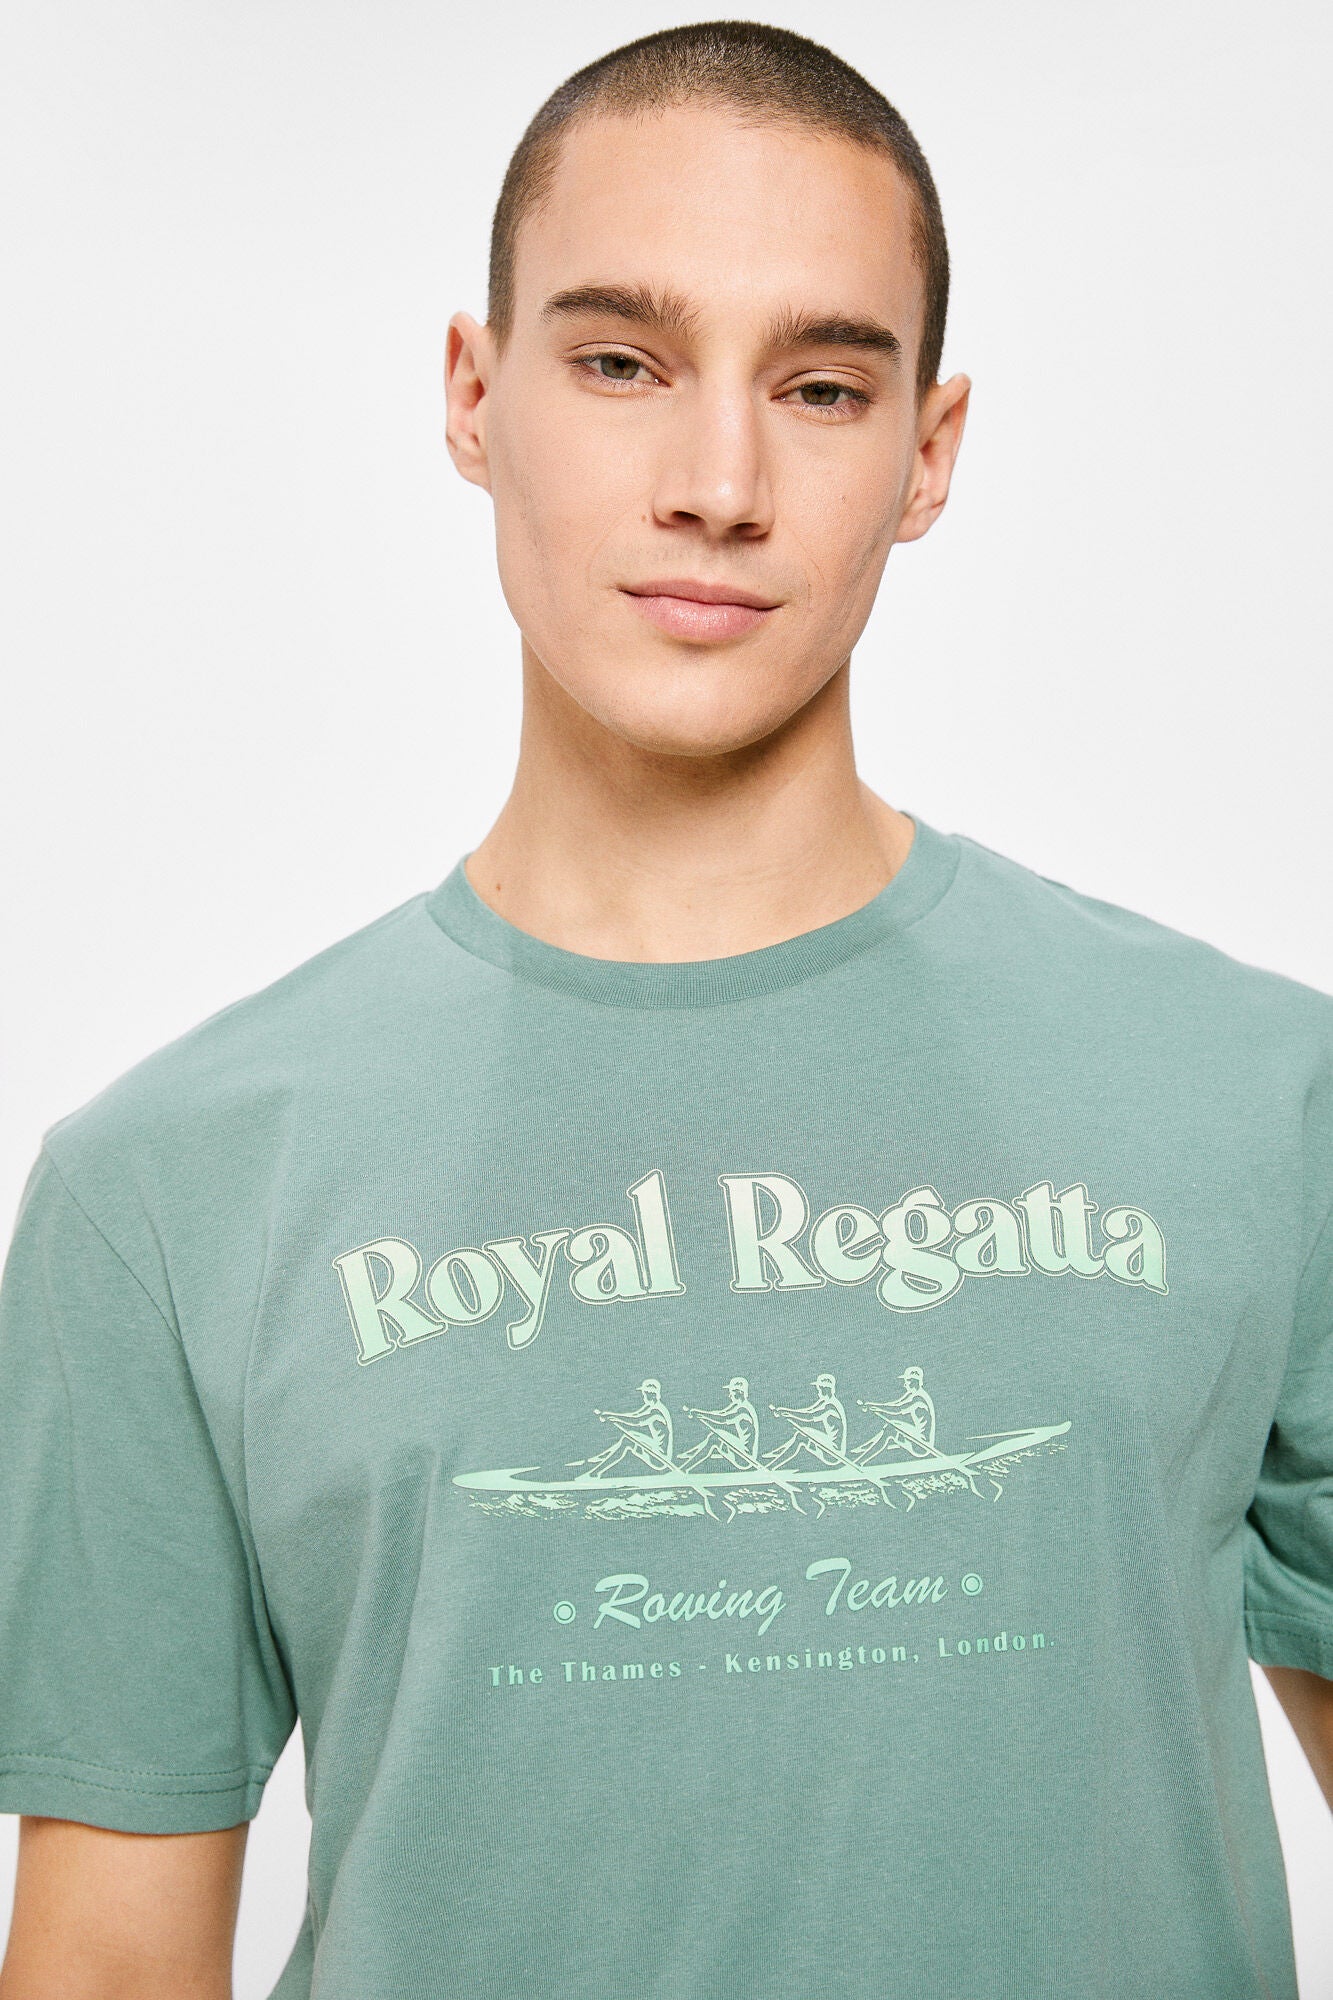 Royal Regatta Printed T-Shirt